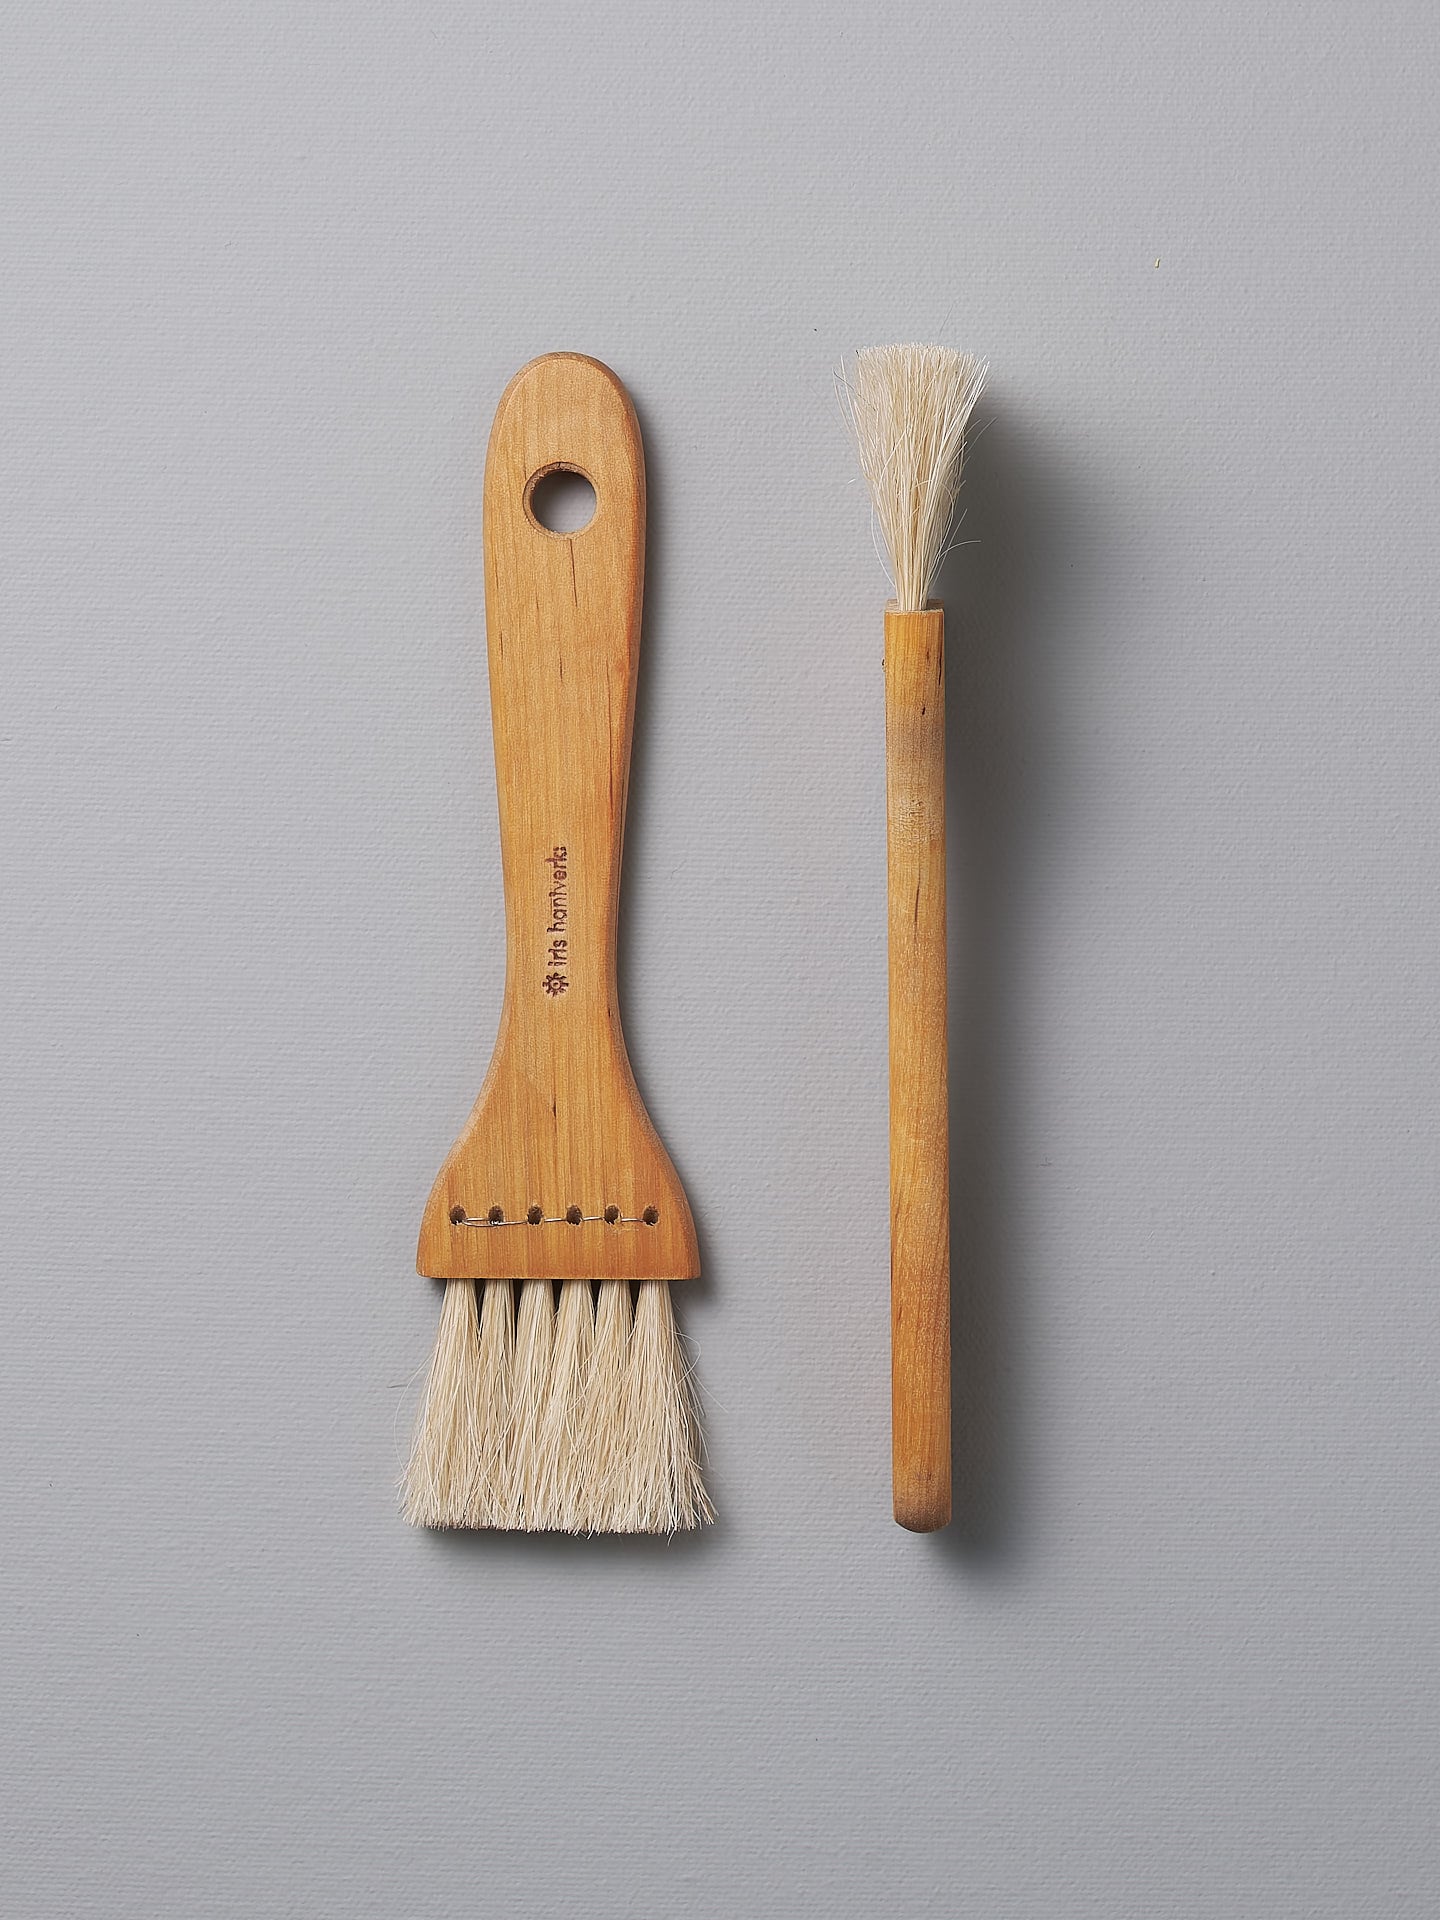 A Pastry Brush – Waxed Birch & Horsehair and a Pastry Brush – Waxed Birch & Horsehair next to each other (brand: Iris Hantverk).